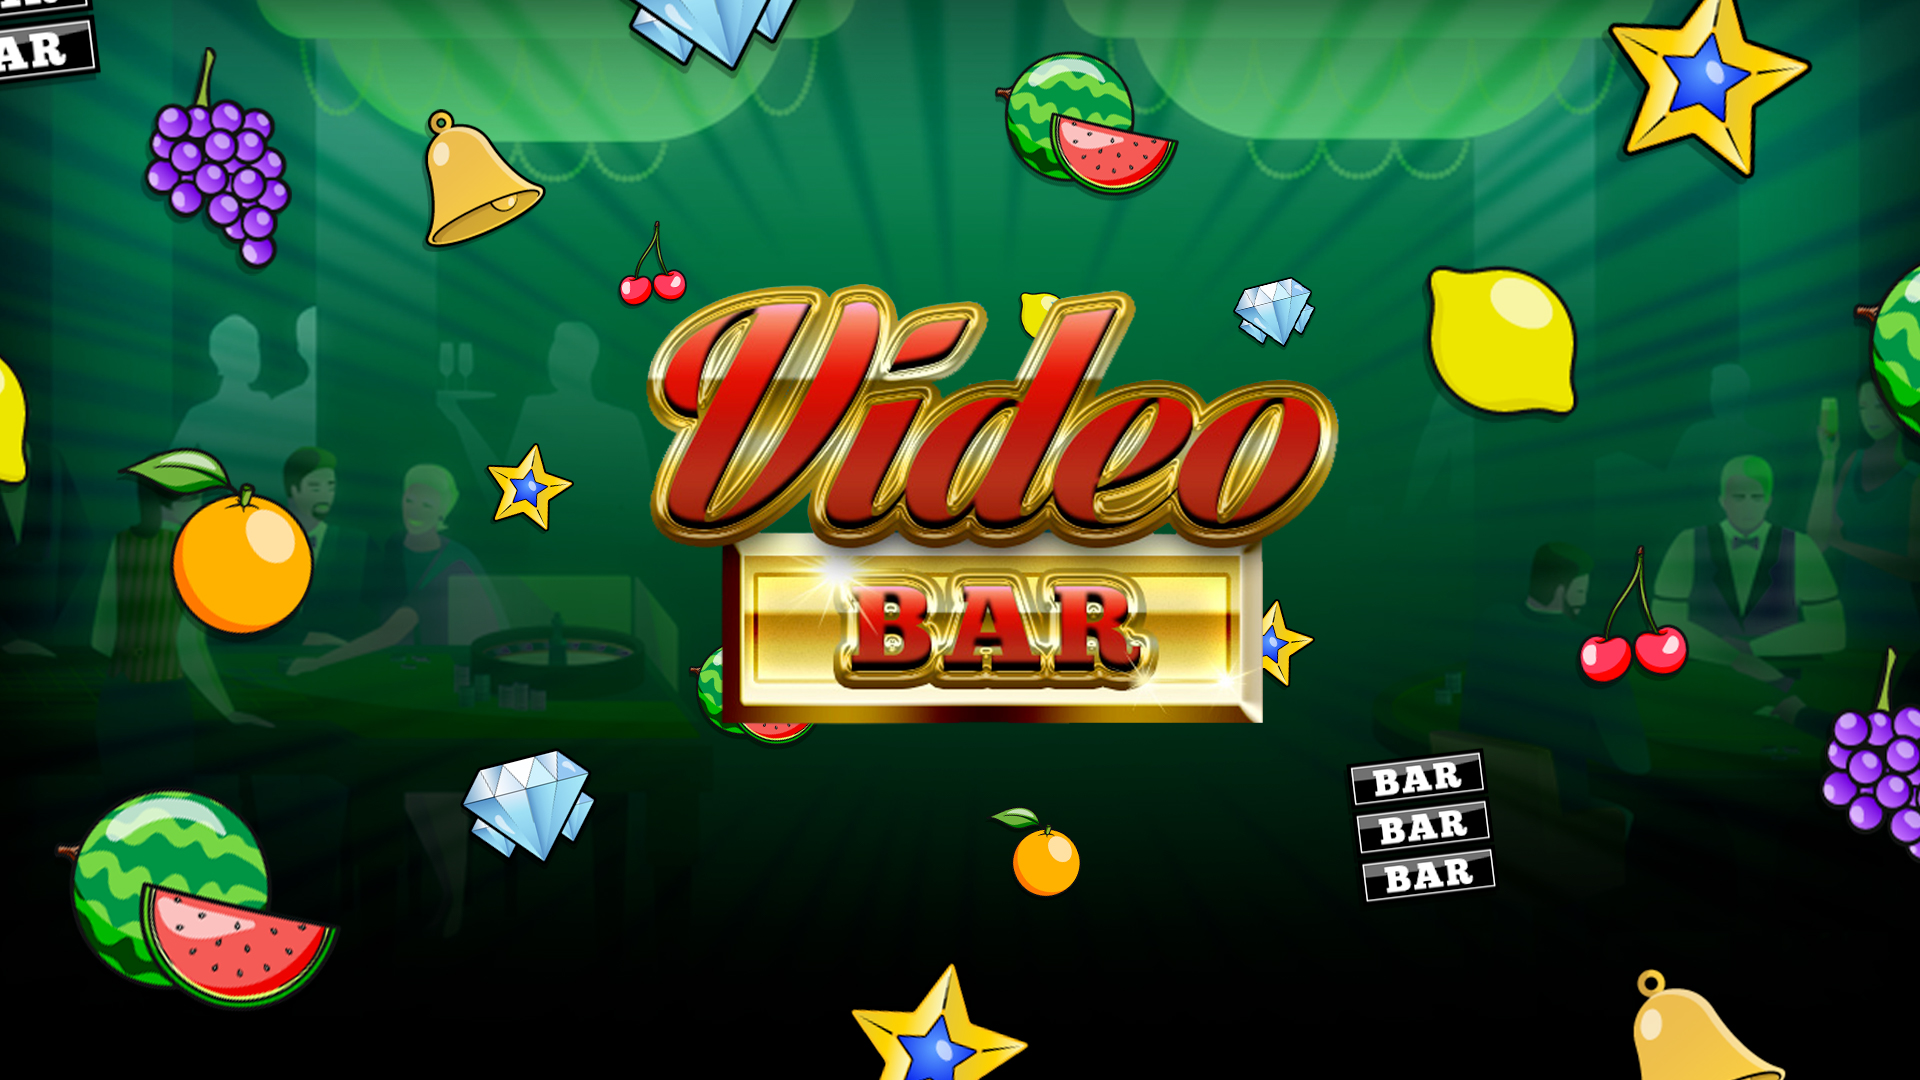 Video-Bar-slot-machine-online-recensione-Betaland-TheClover-migliori-slot-online